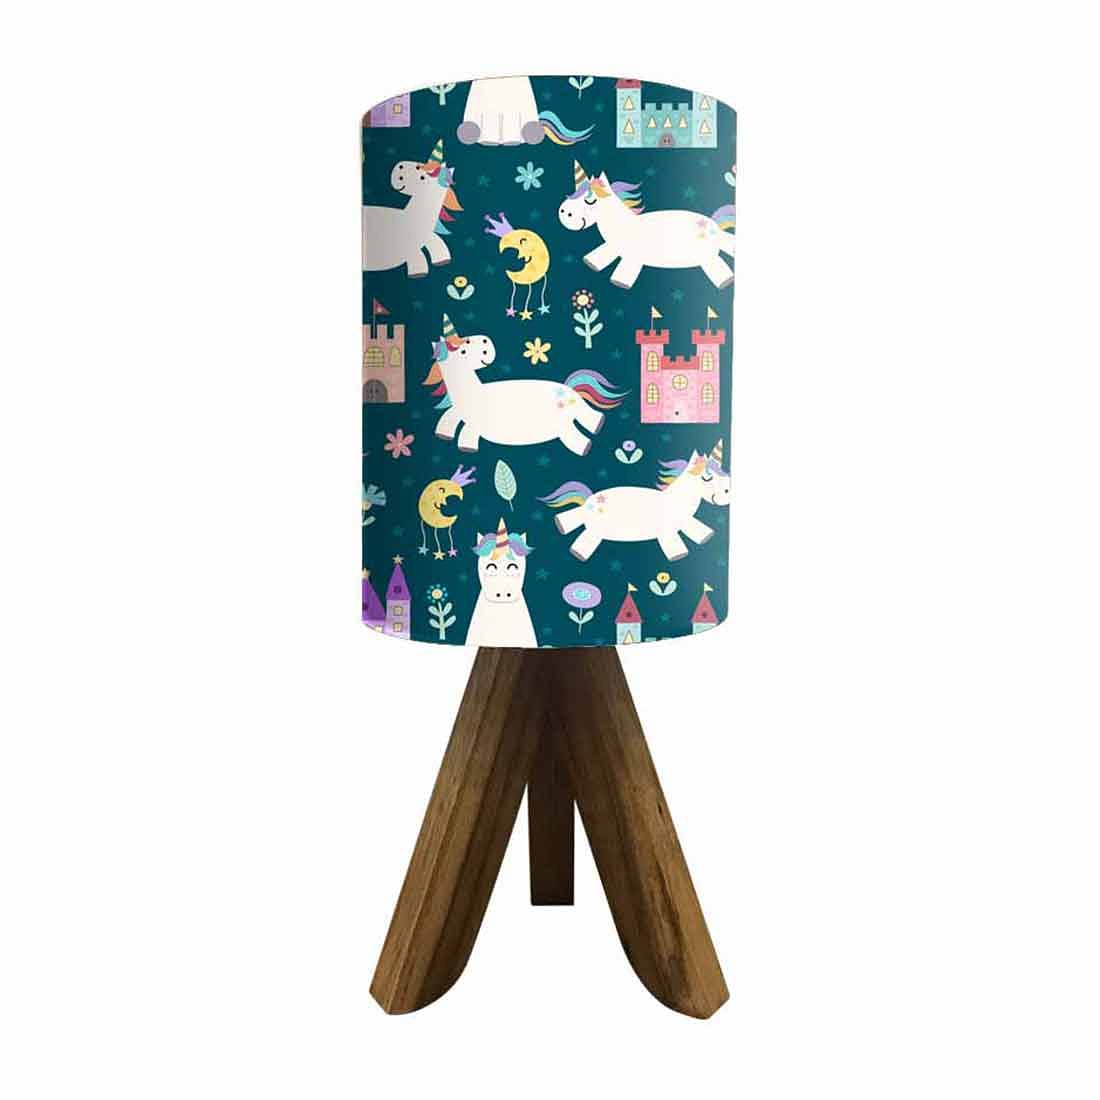 Wood Base Table Lamps For Kids  - Cute Unicorn Nutcase